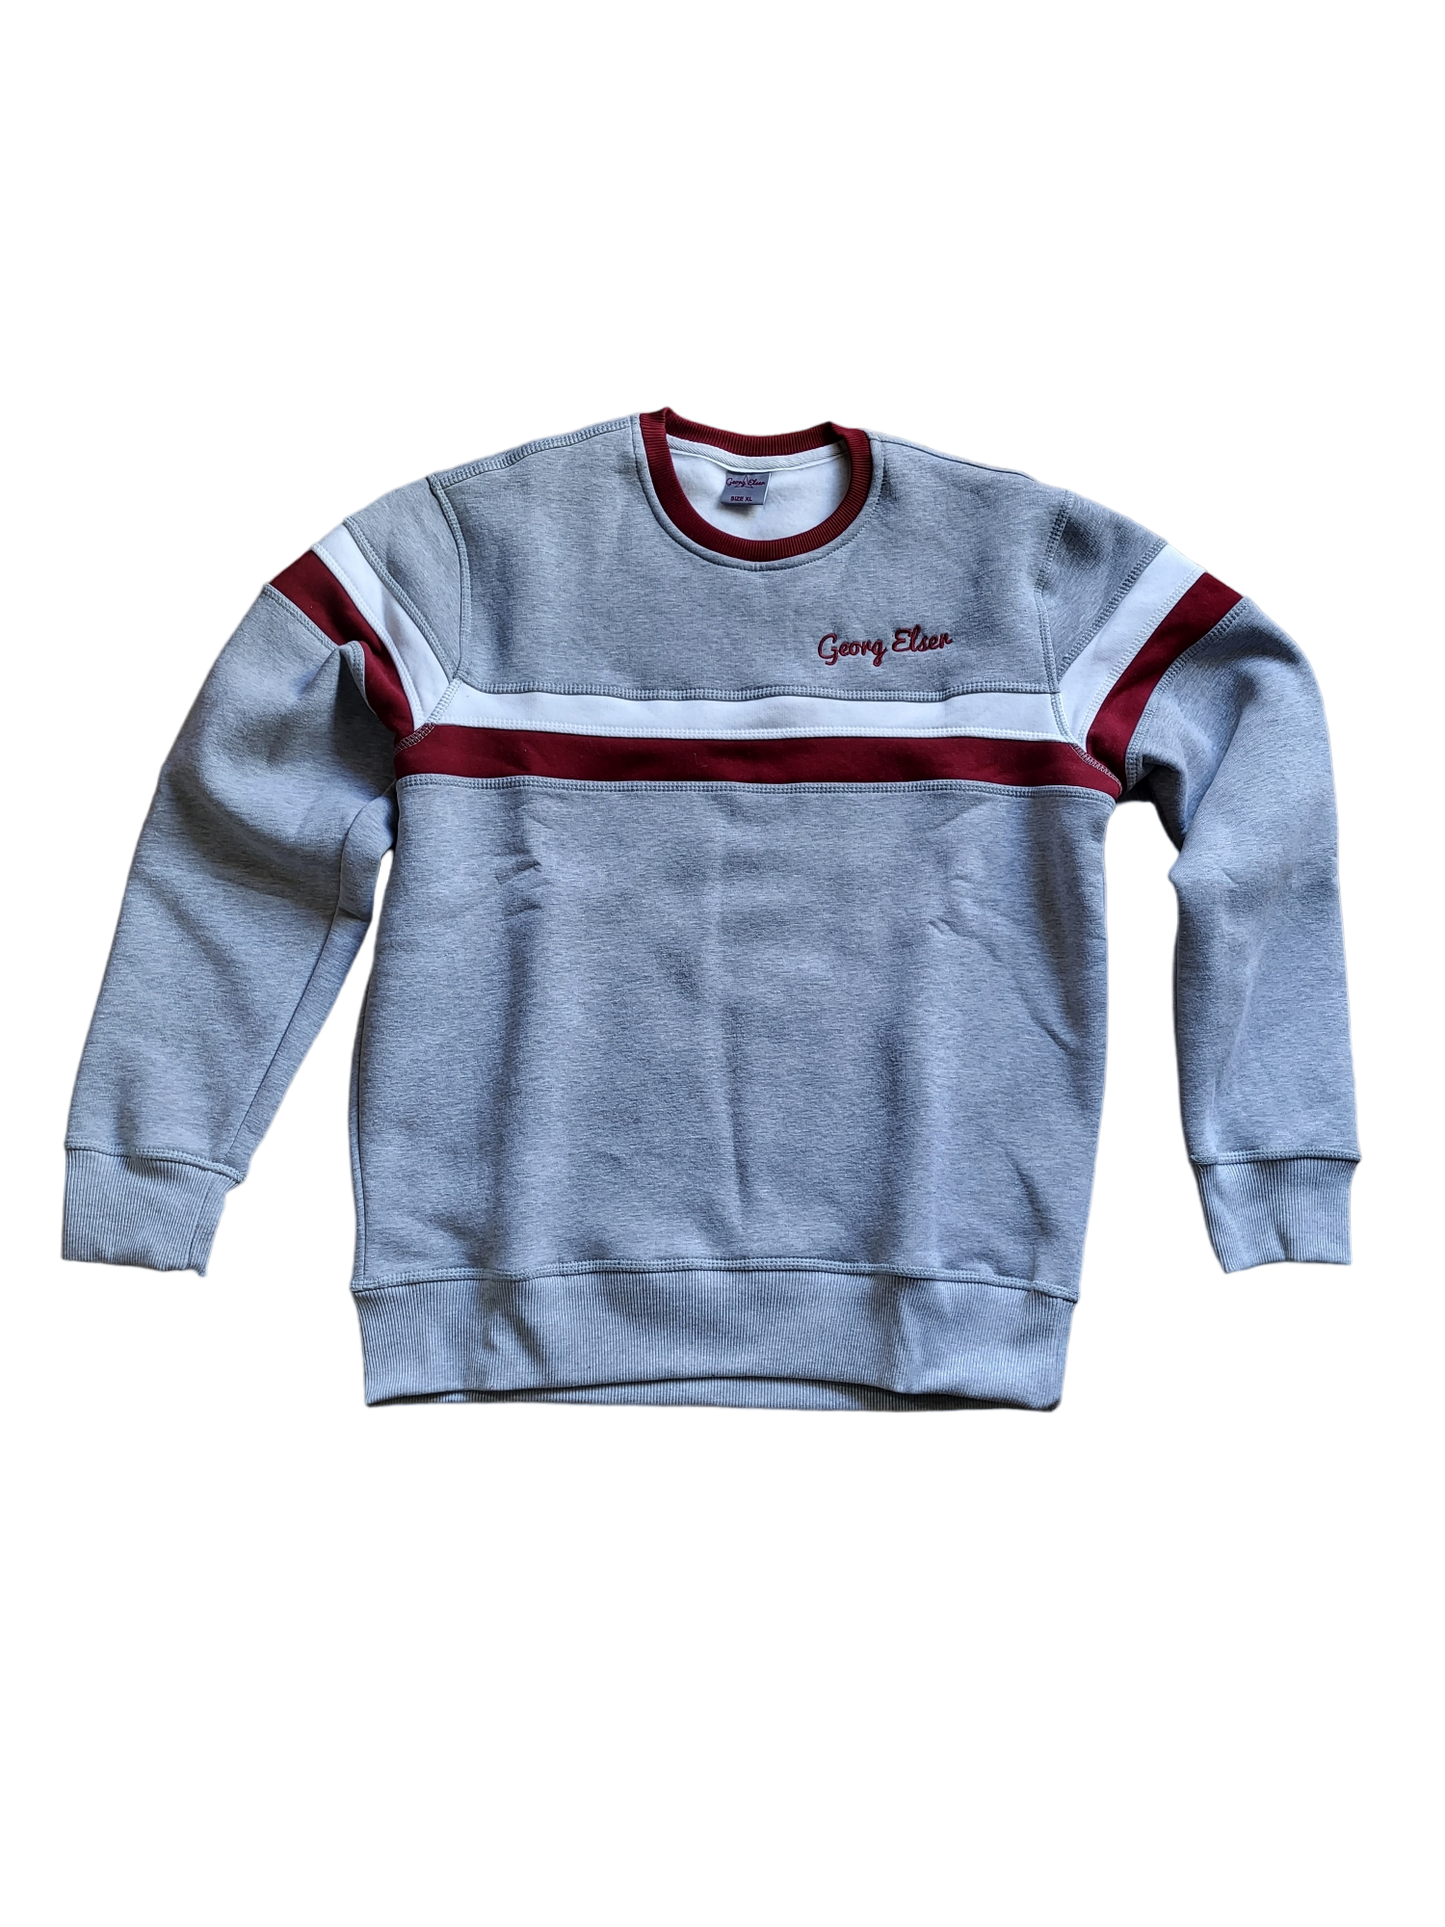 Sweater "Warsaw Ghetto Uprising" (tailliert)